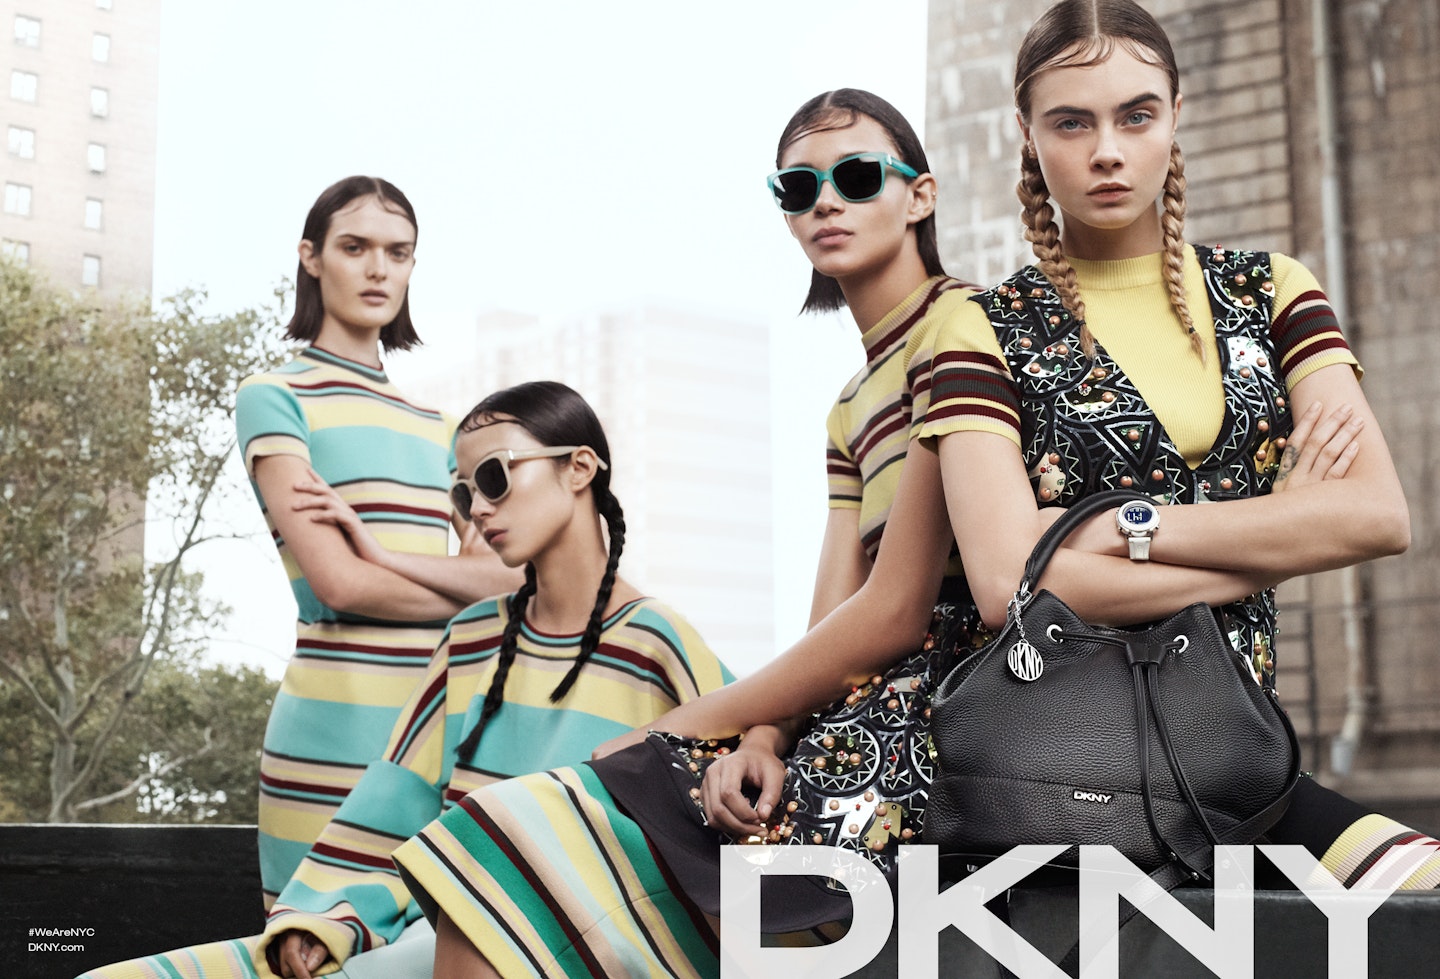 EXCLUSIVE: Binx Walton Joins Cara Delevingne In DKNY SS15 Ad Campaign